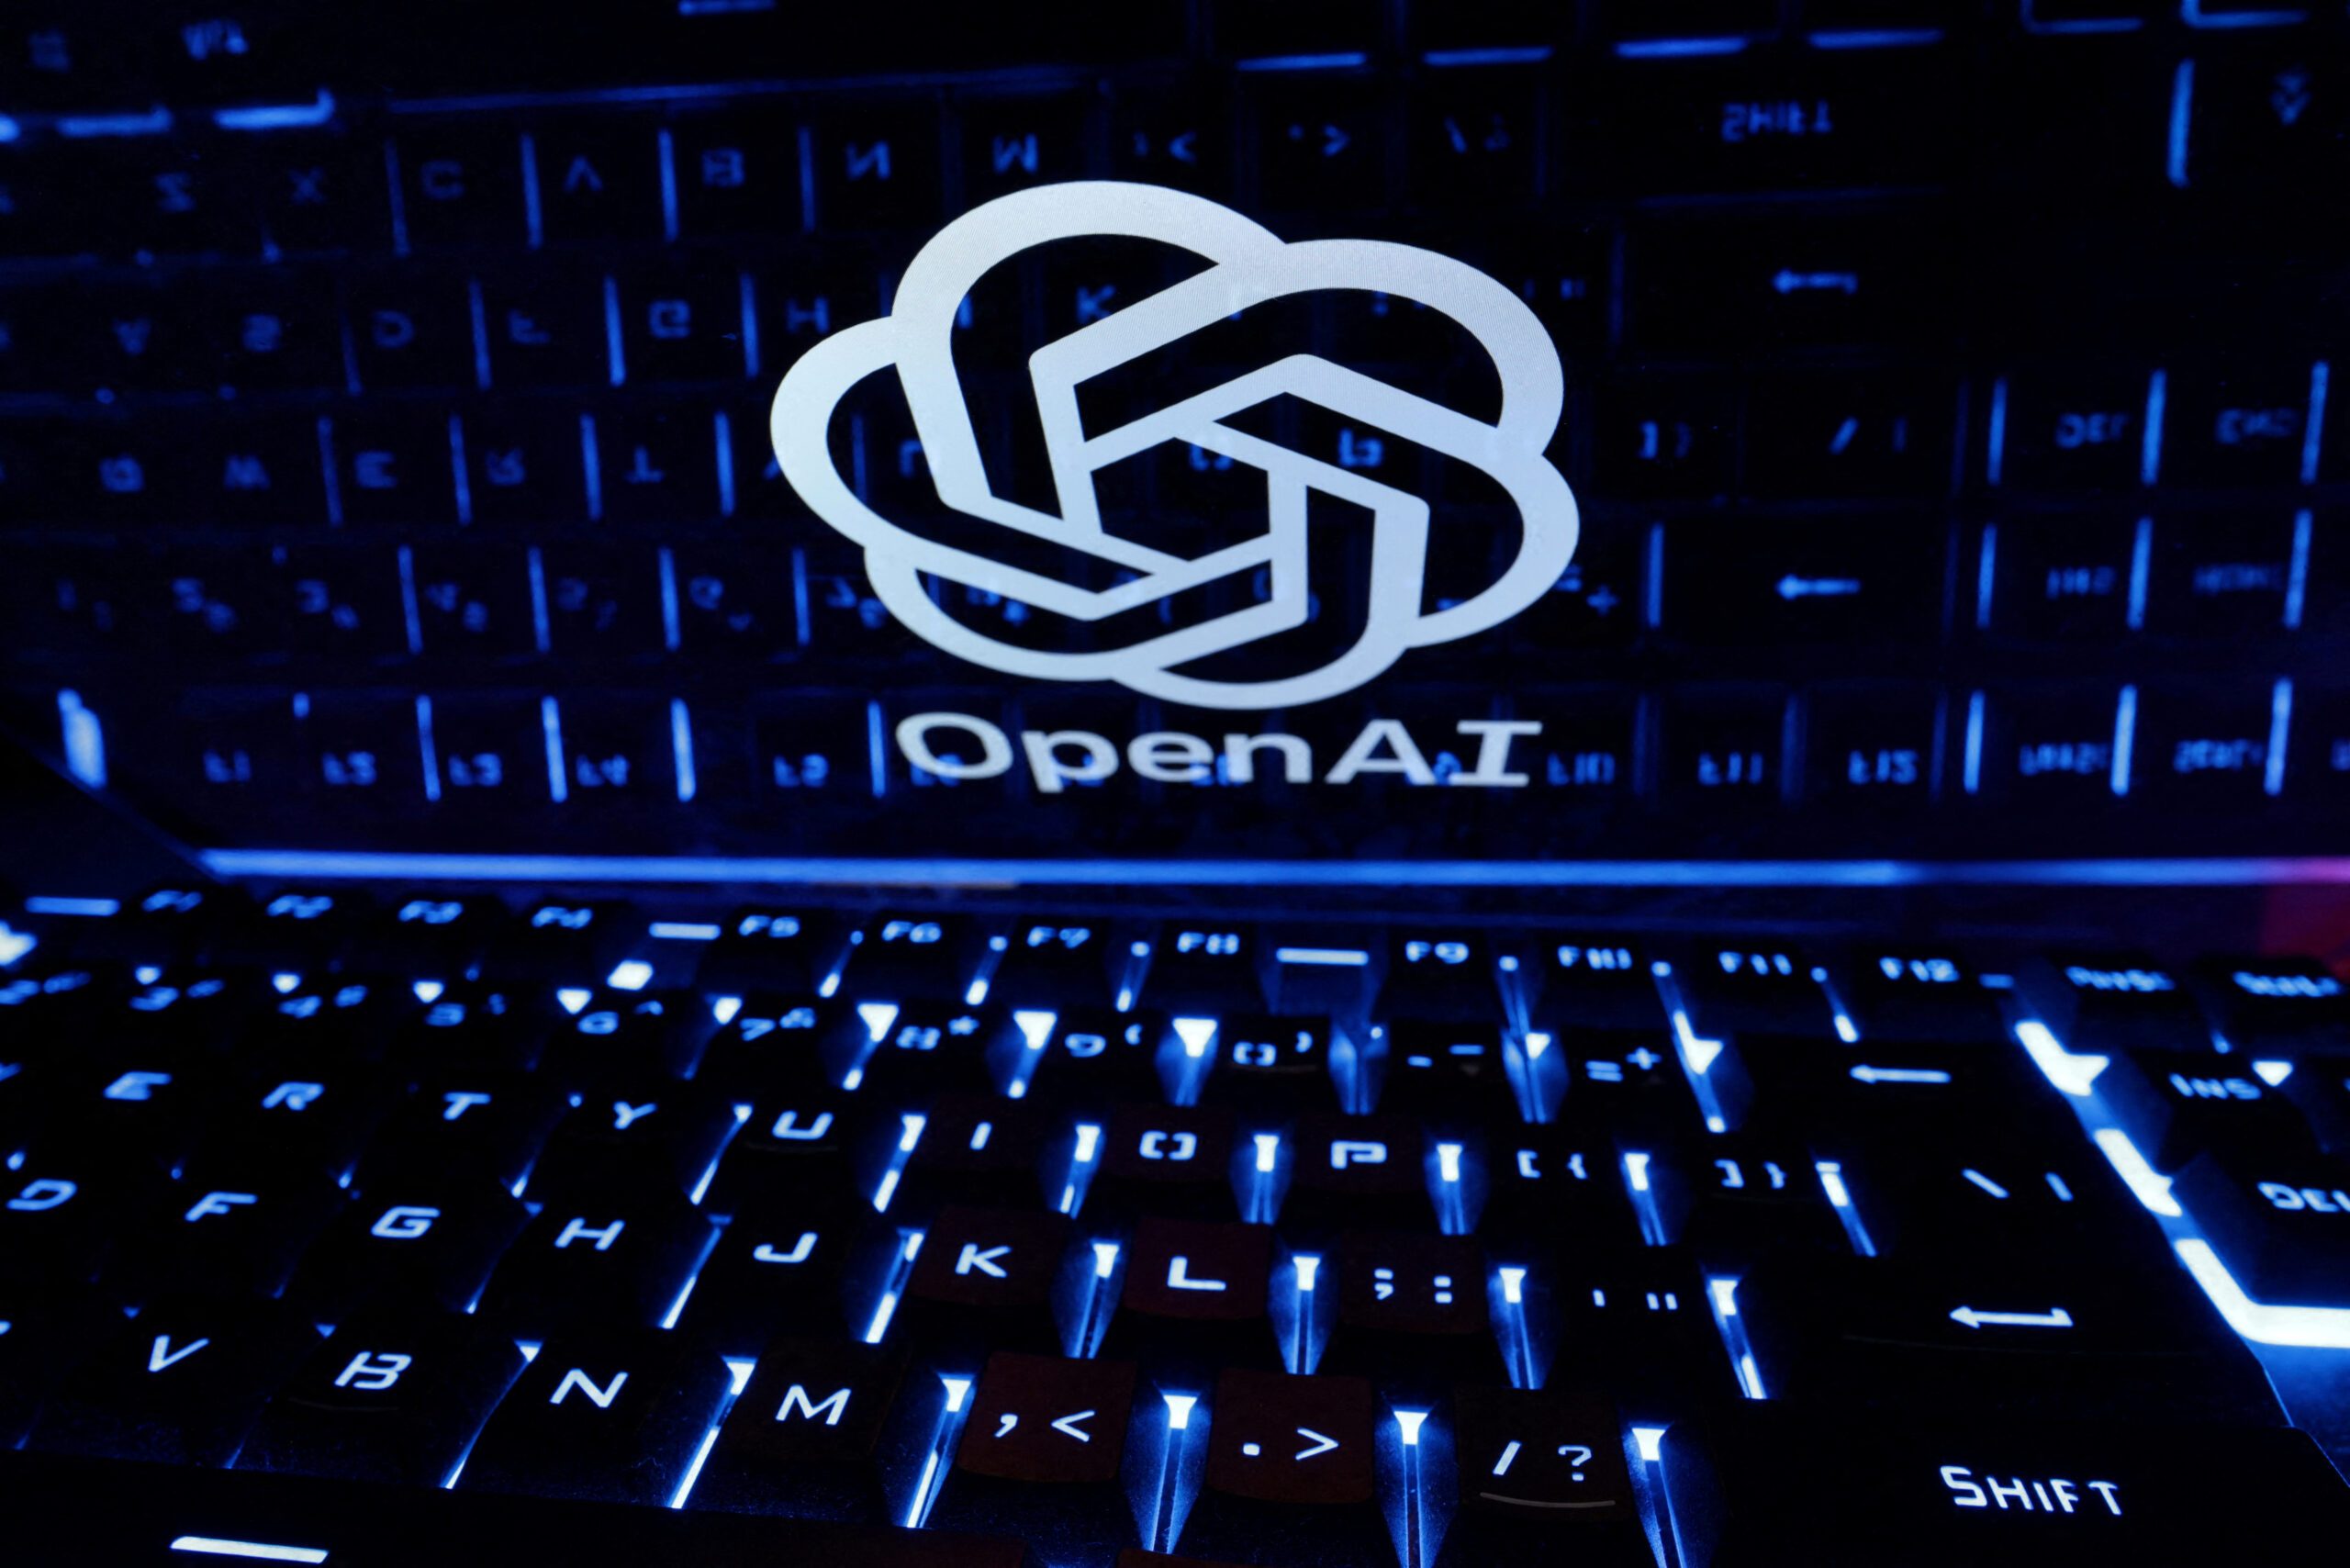 Microsoft's partnership with OpenAI comes under antitrust scrutiny in US, UK